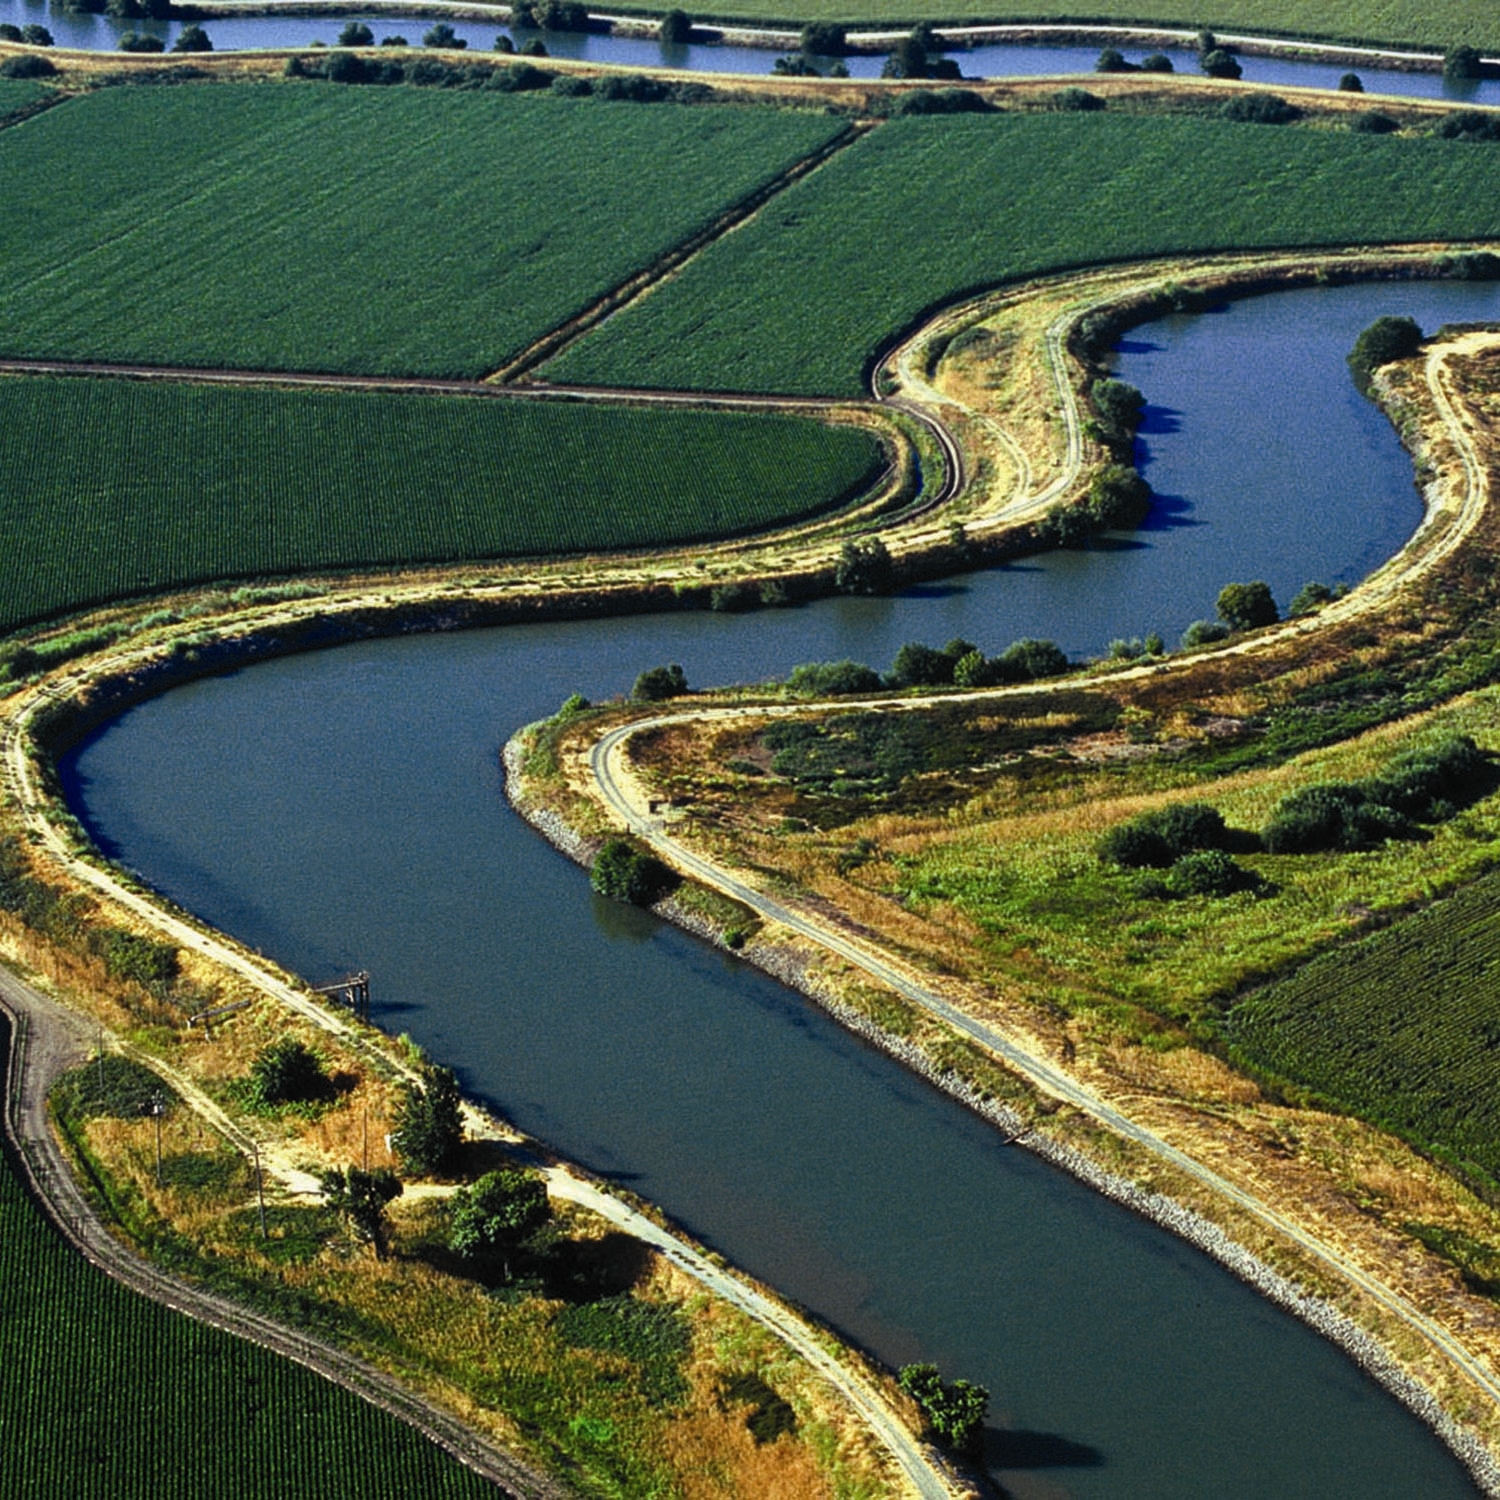 Blue Delya canal winding through green crops